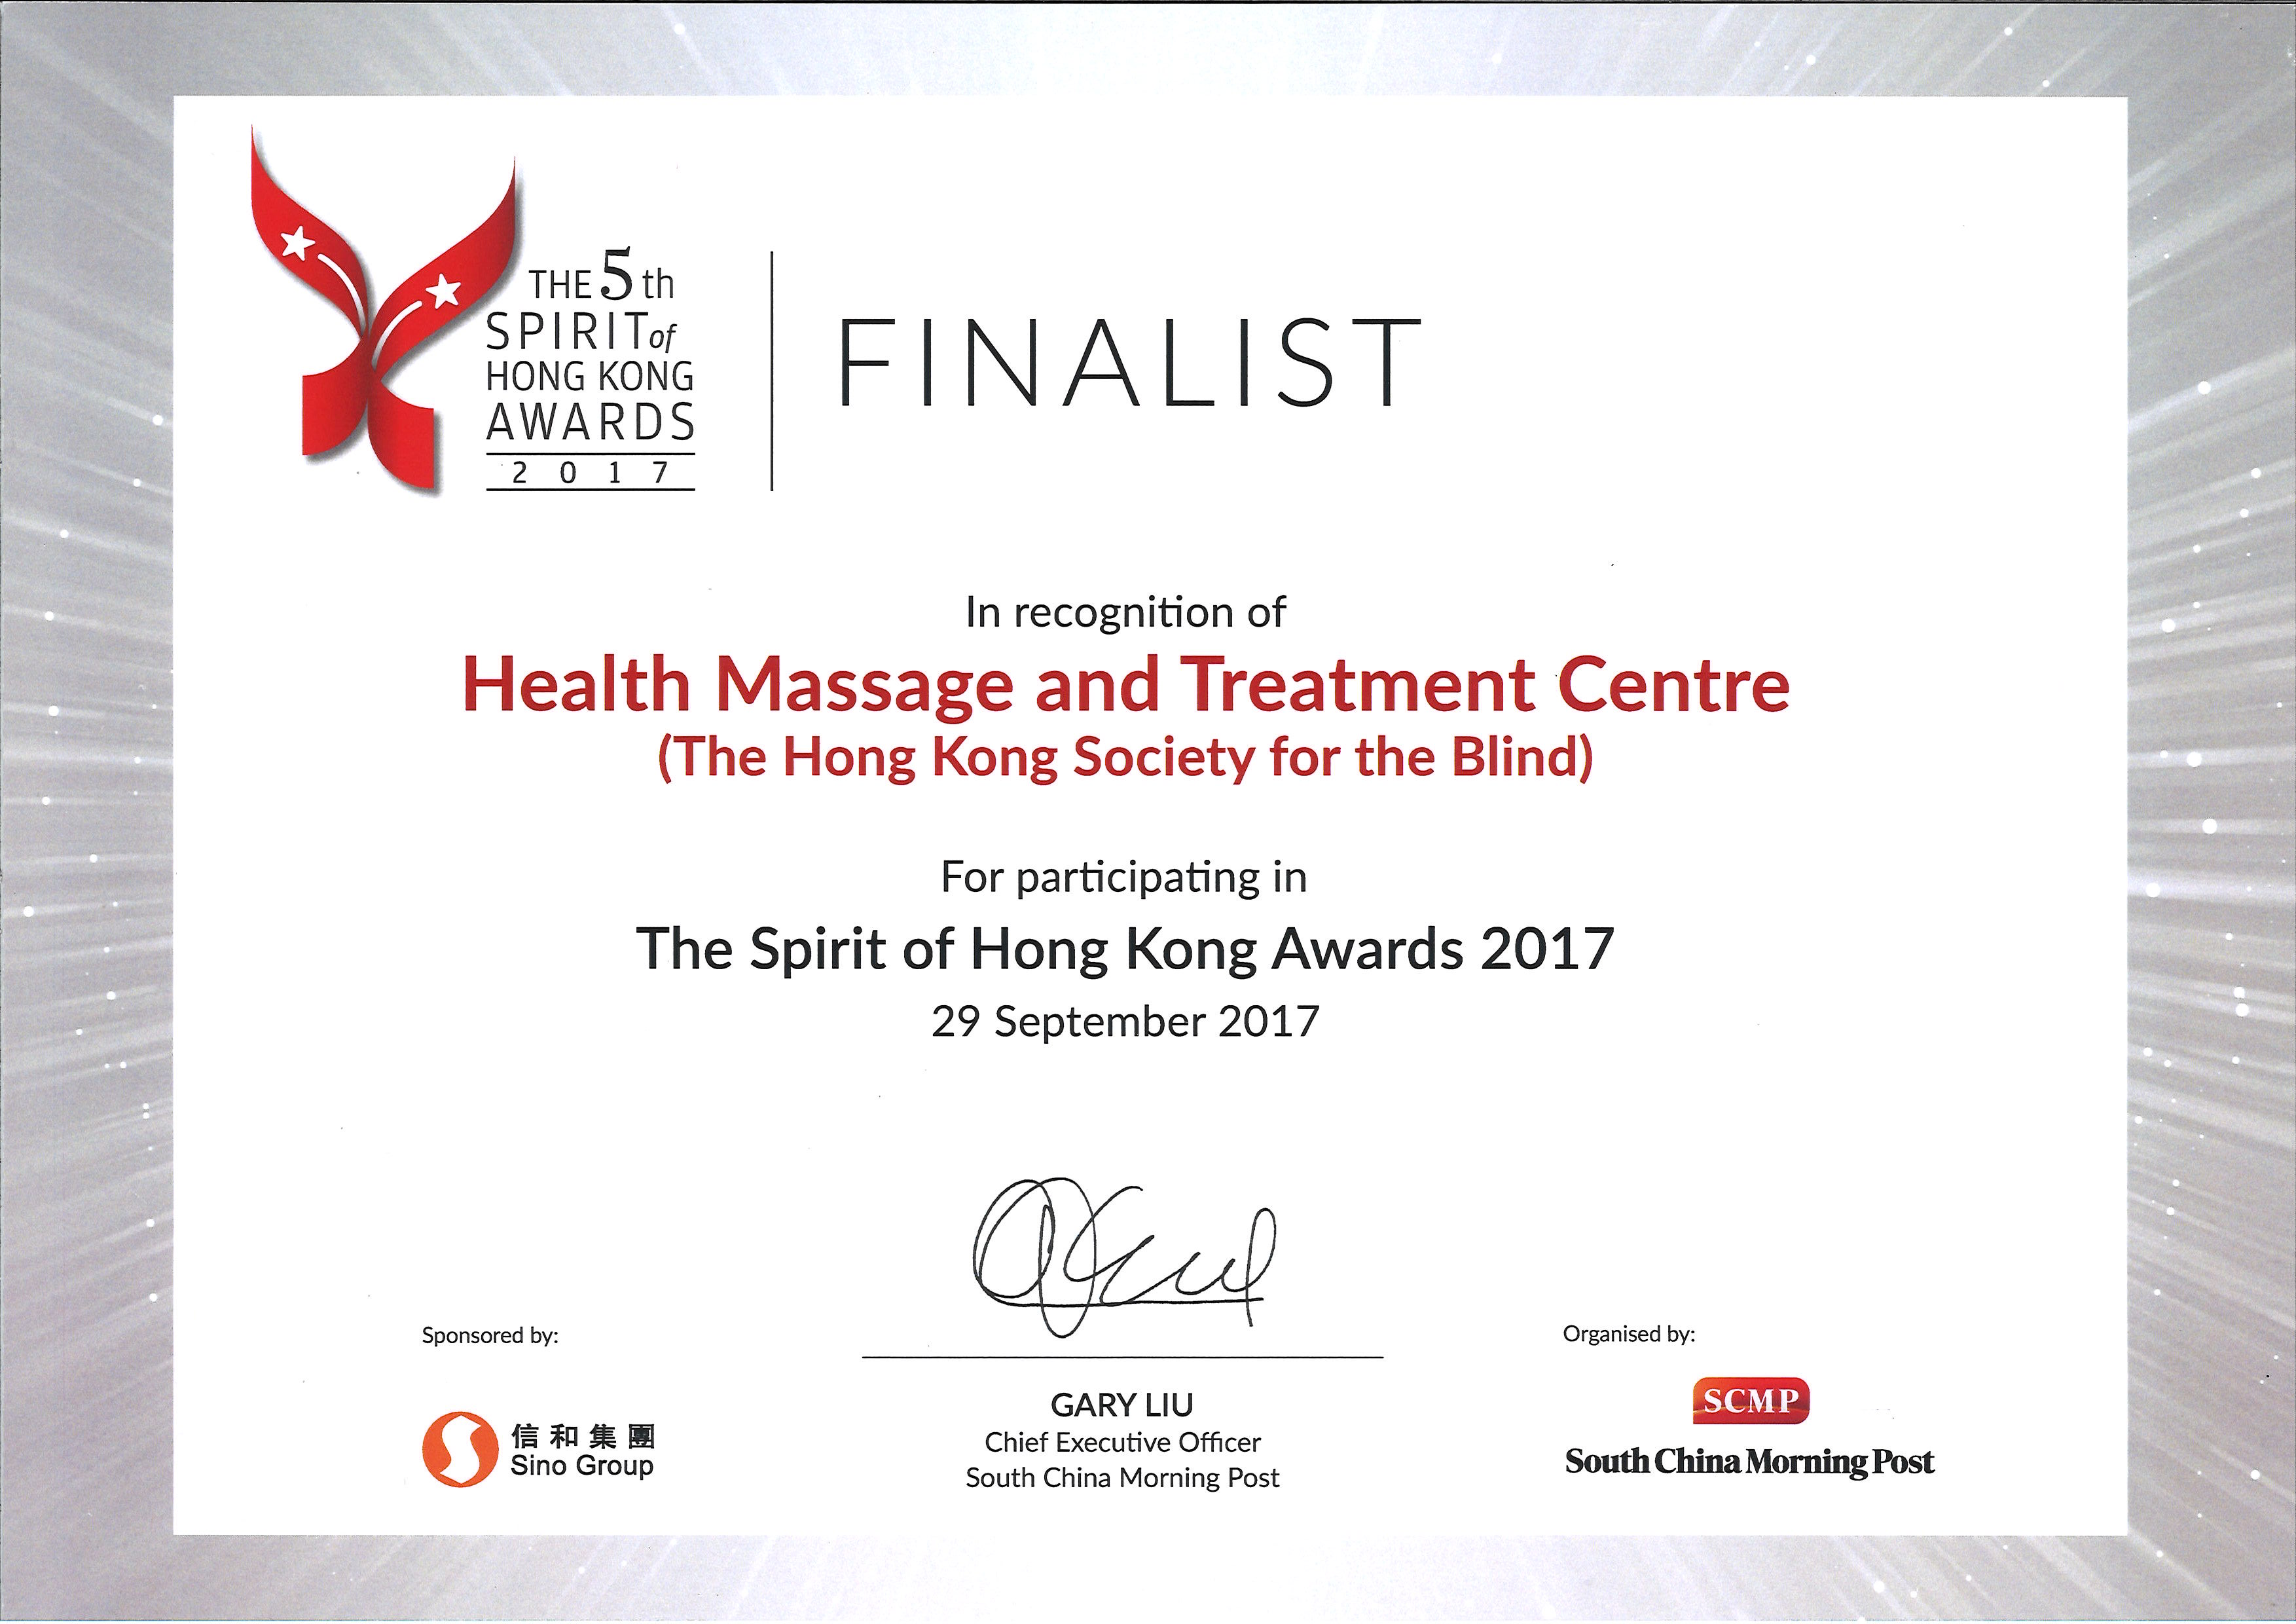 The Spirit of Hong Kong Awards 2017 Finalist